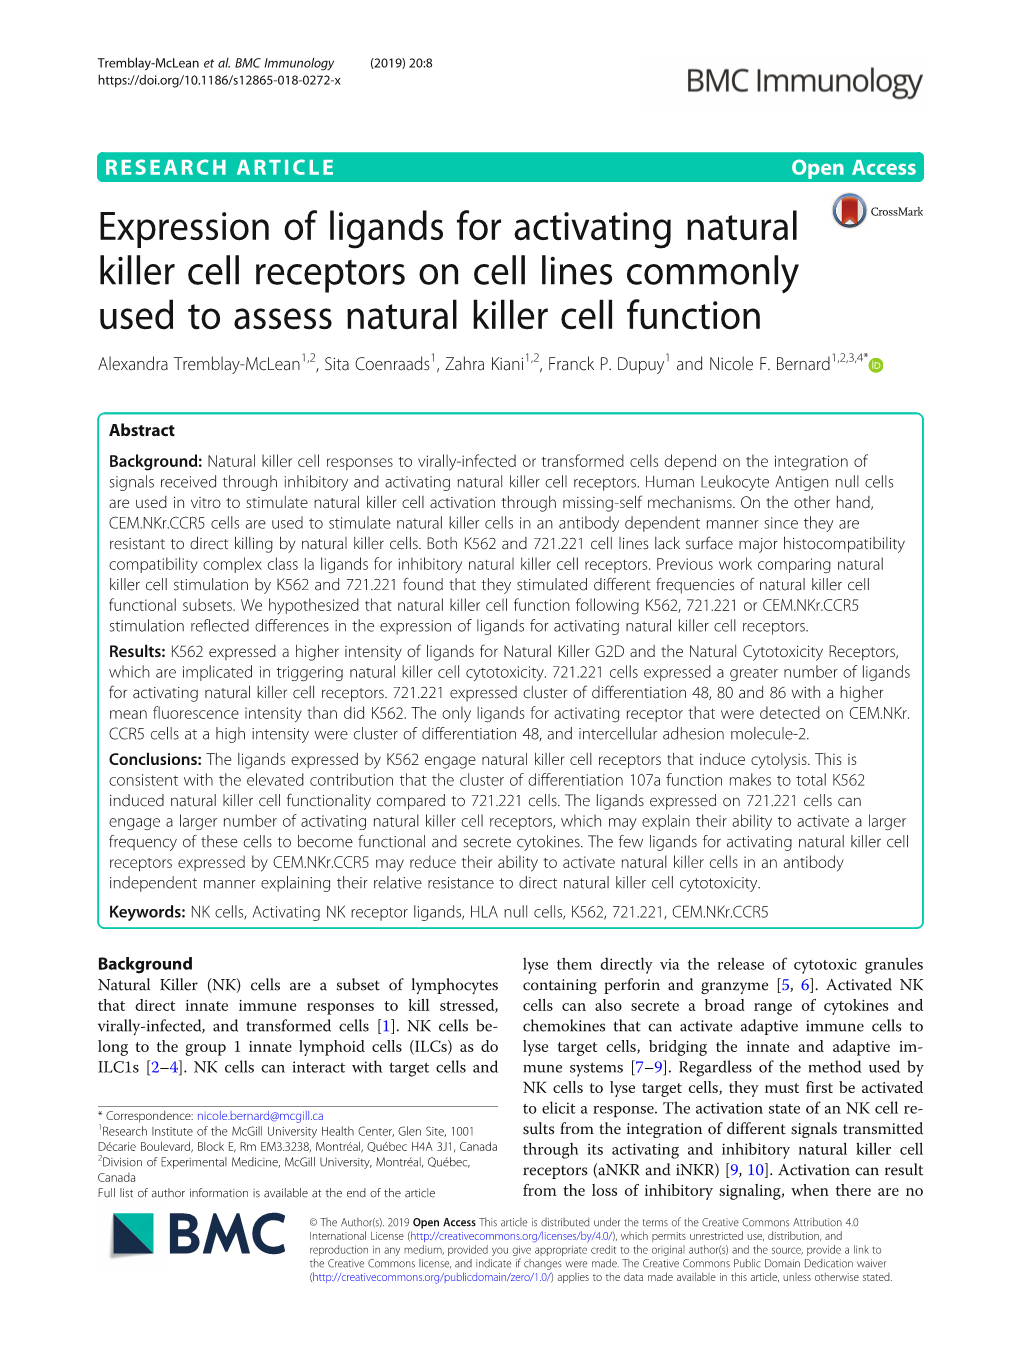 Expression of Ligands for Activating Natural Killer Cell Receptors on Cell